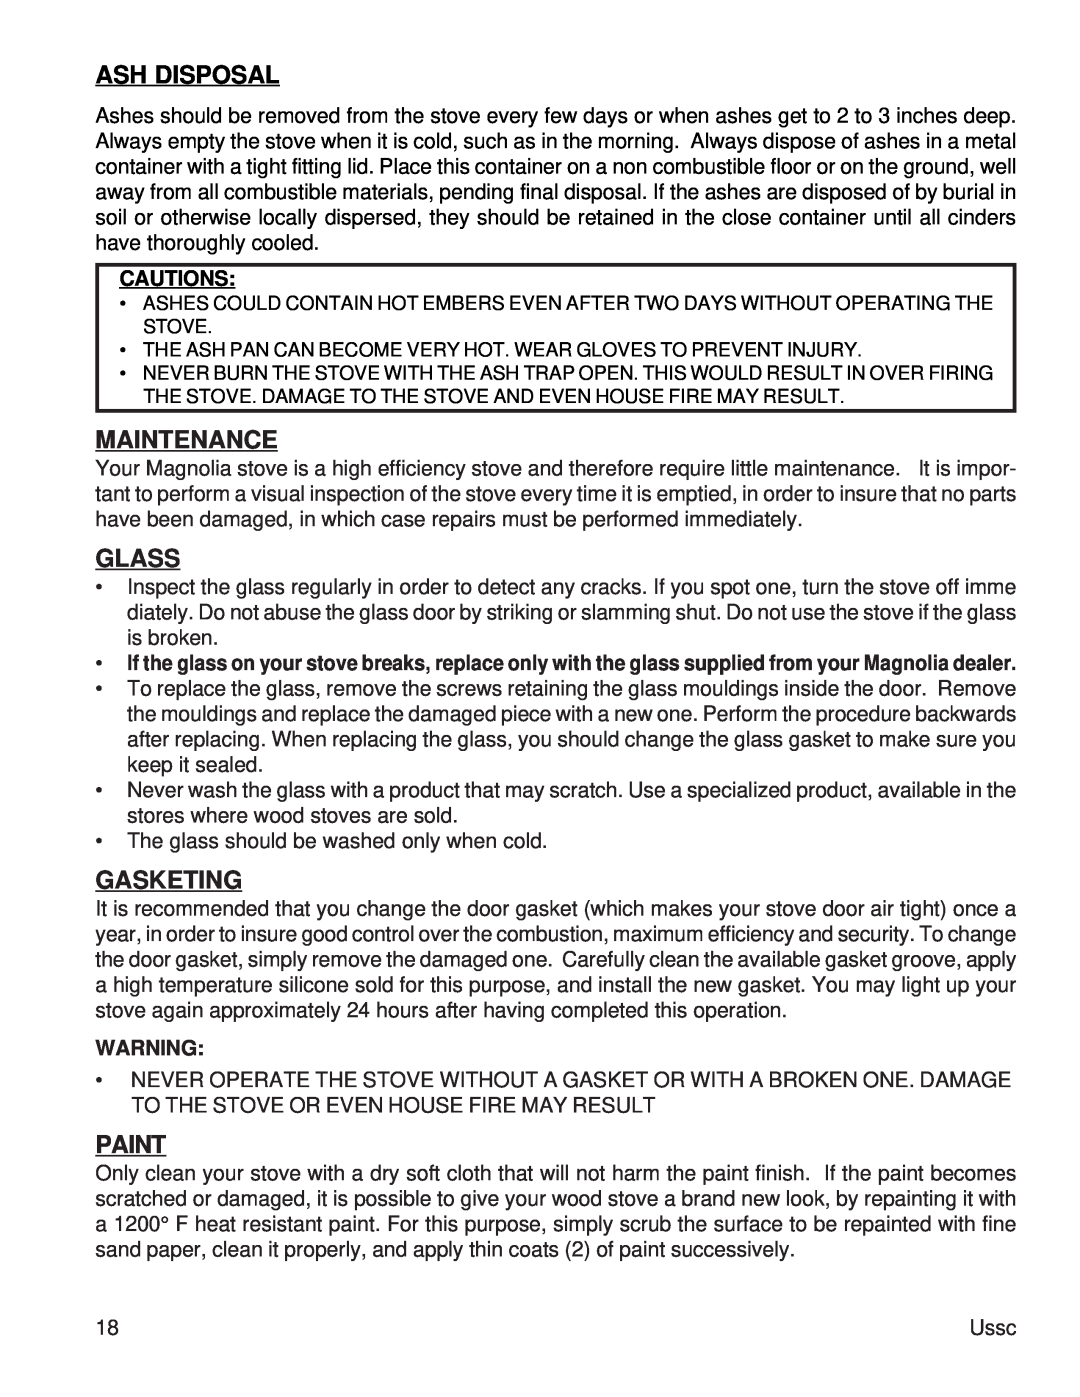 United States Stove 2015 instruction manual Ash Disposal, Maintenance, Glass, Gasketing, Paint 